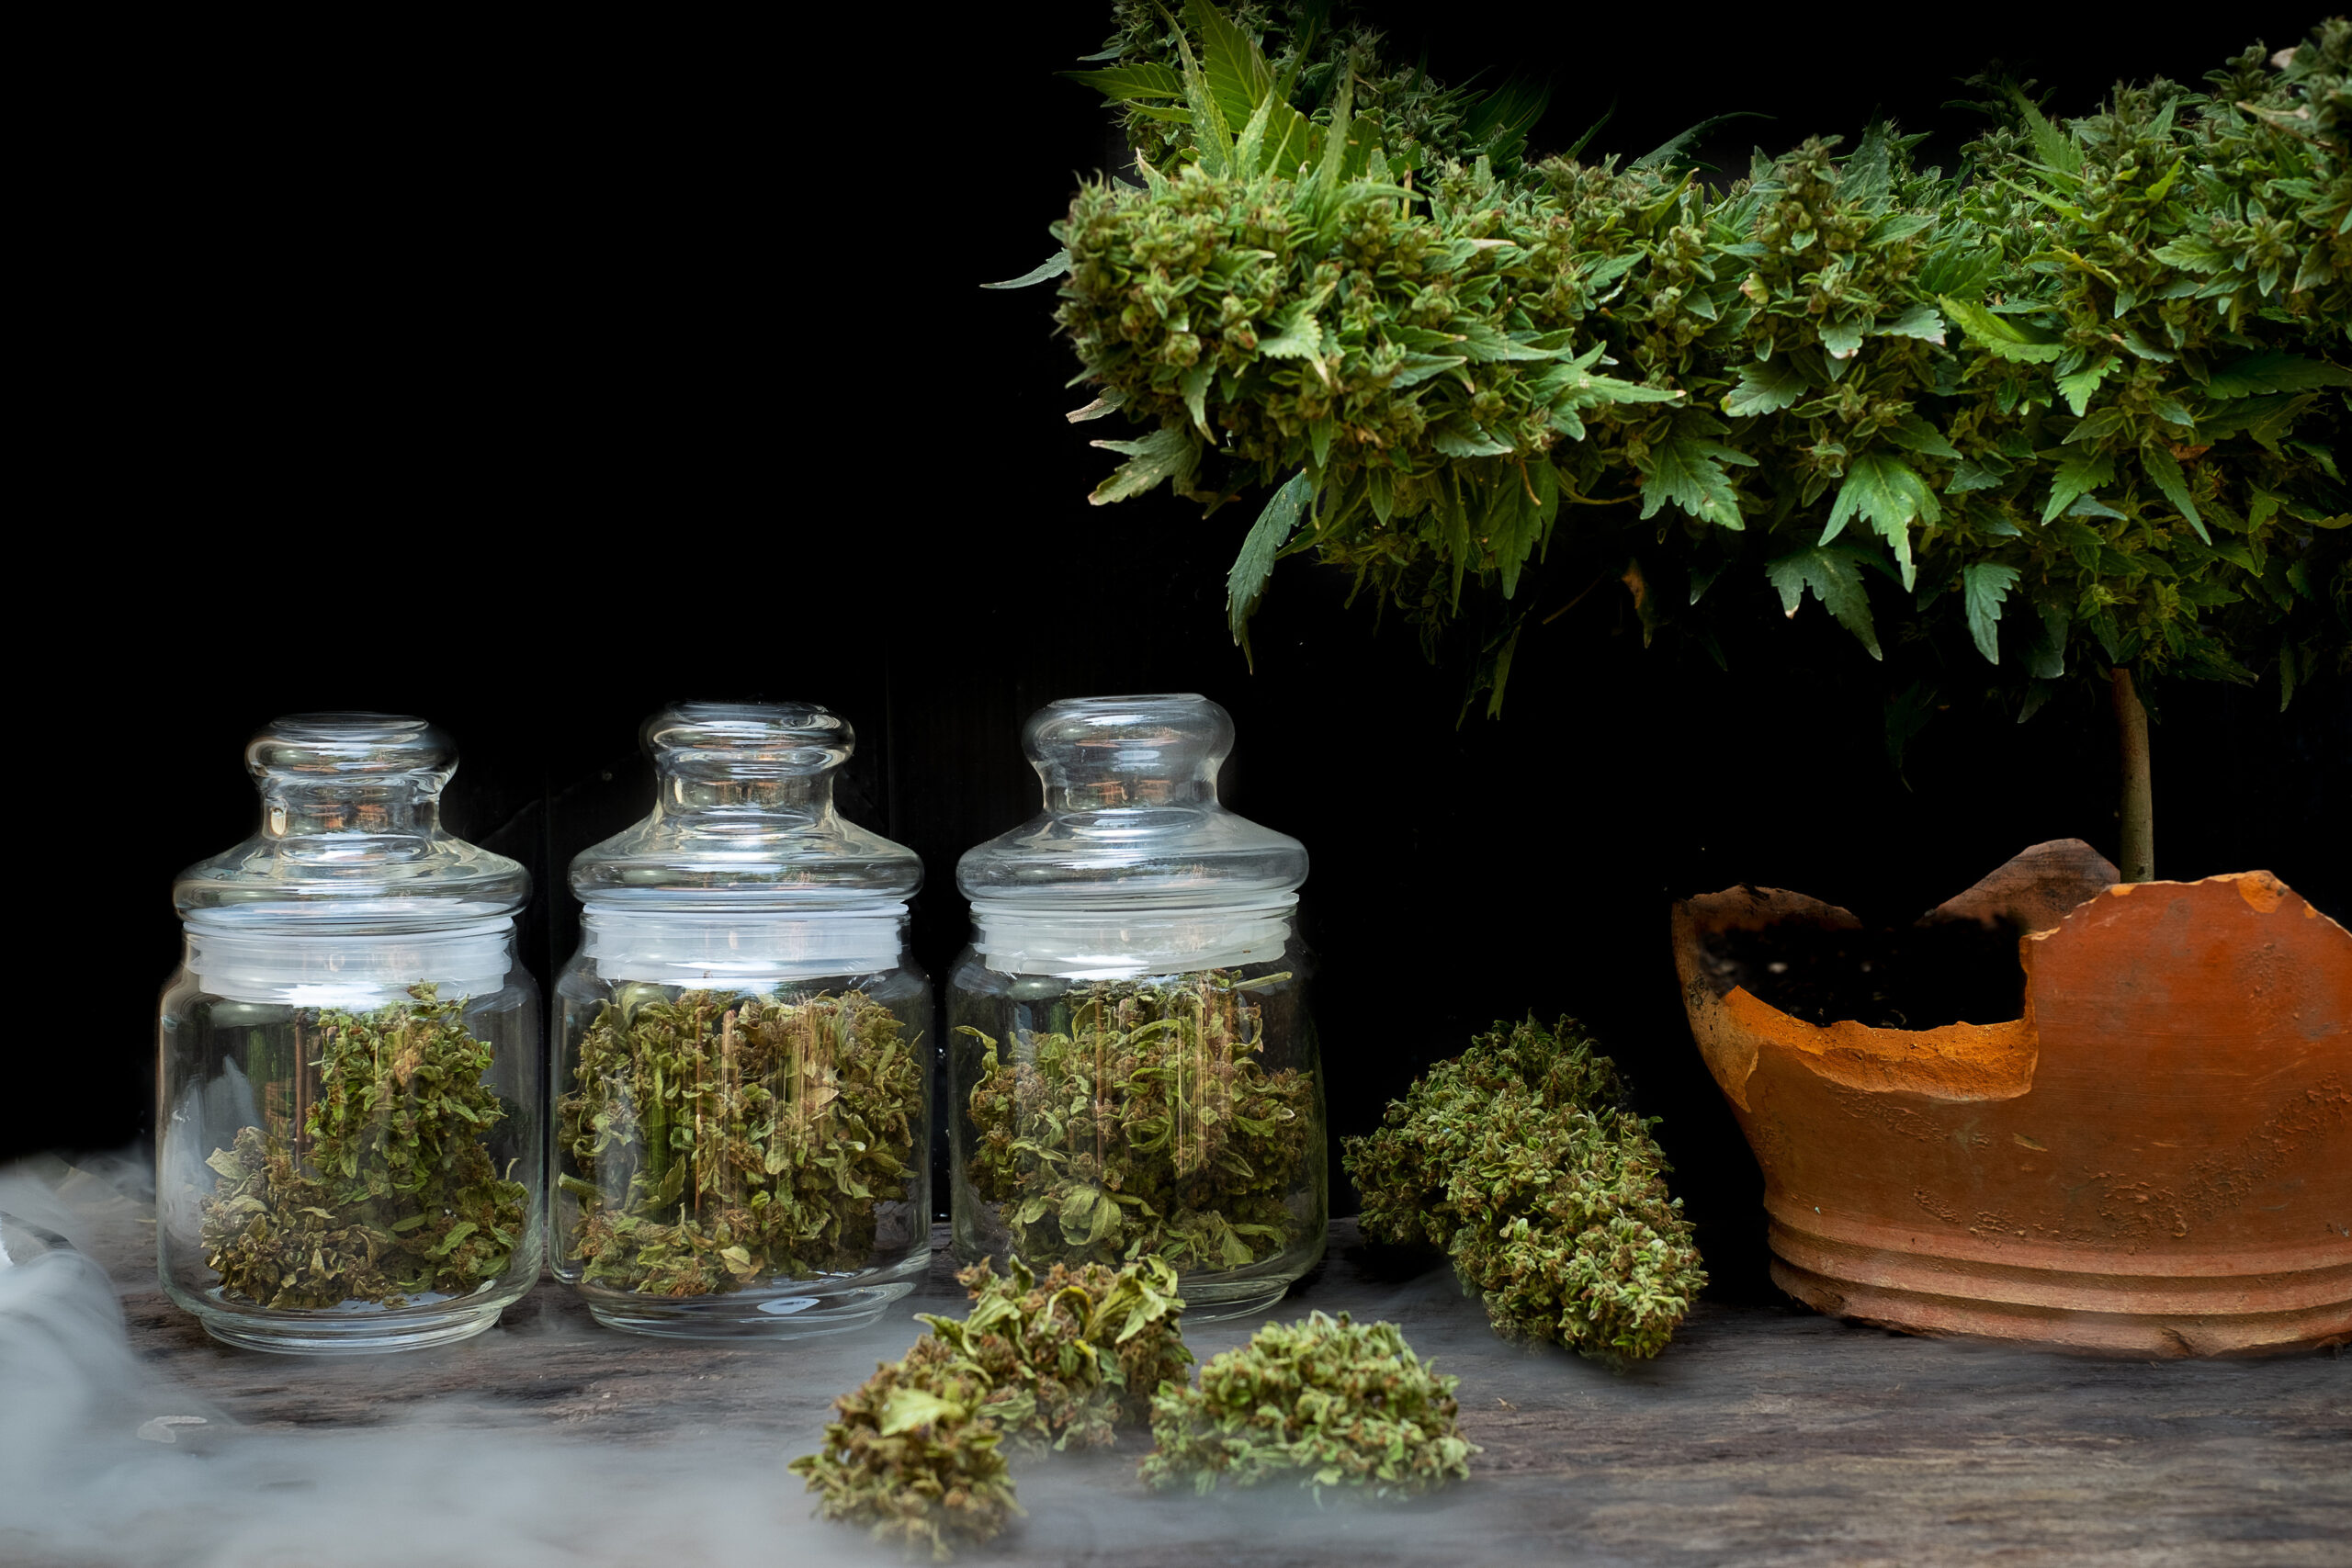 the-marijuana-buds-in-a-clear-glass-jar-sit